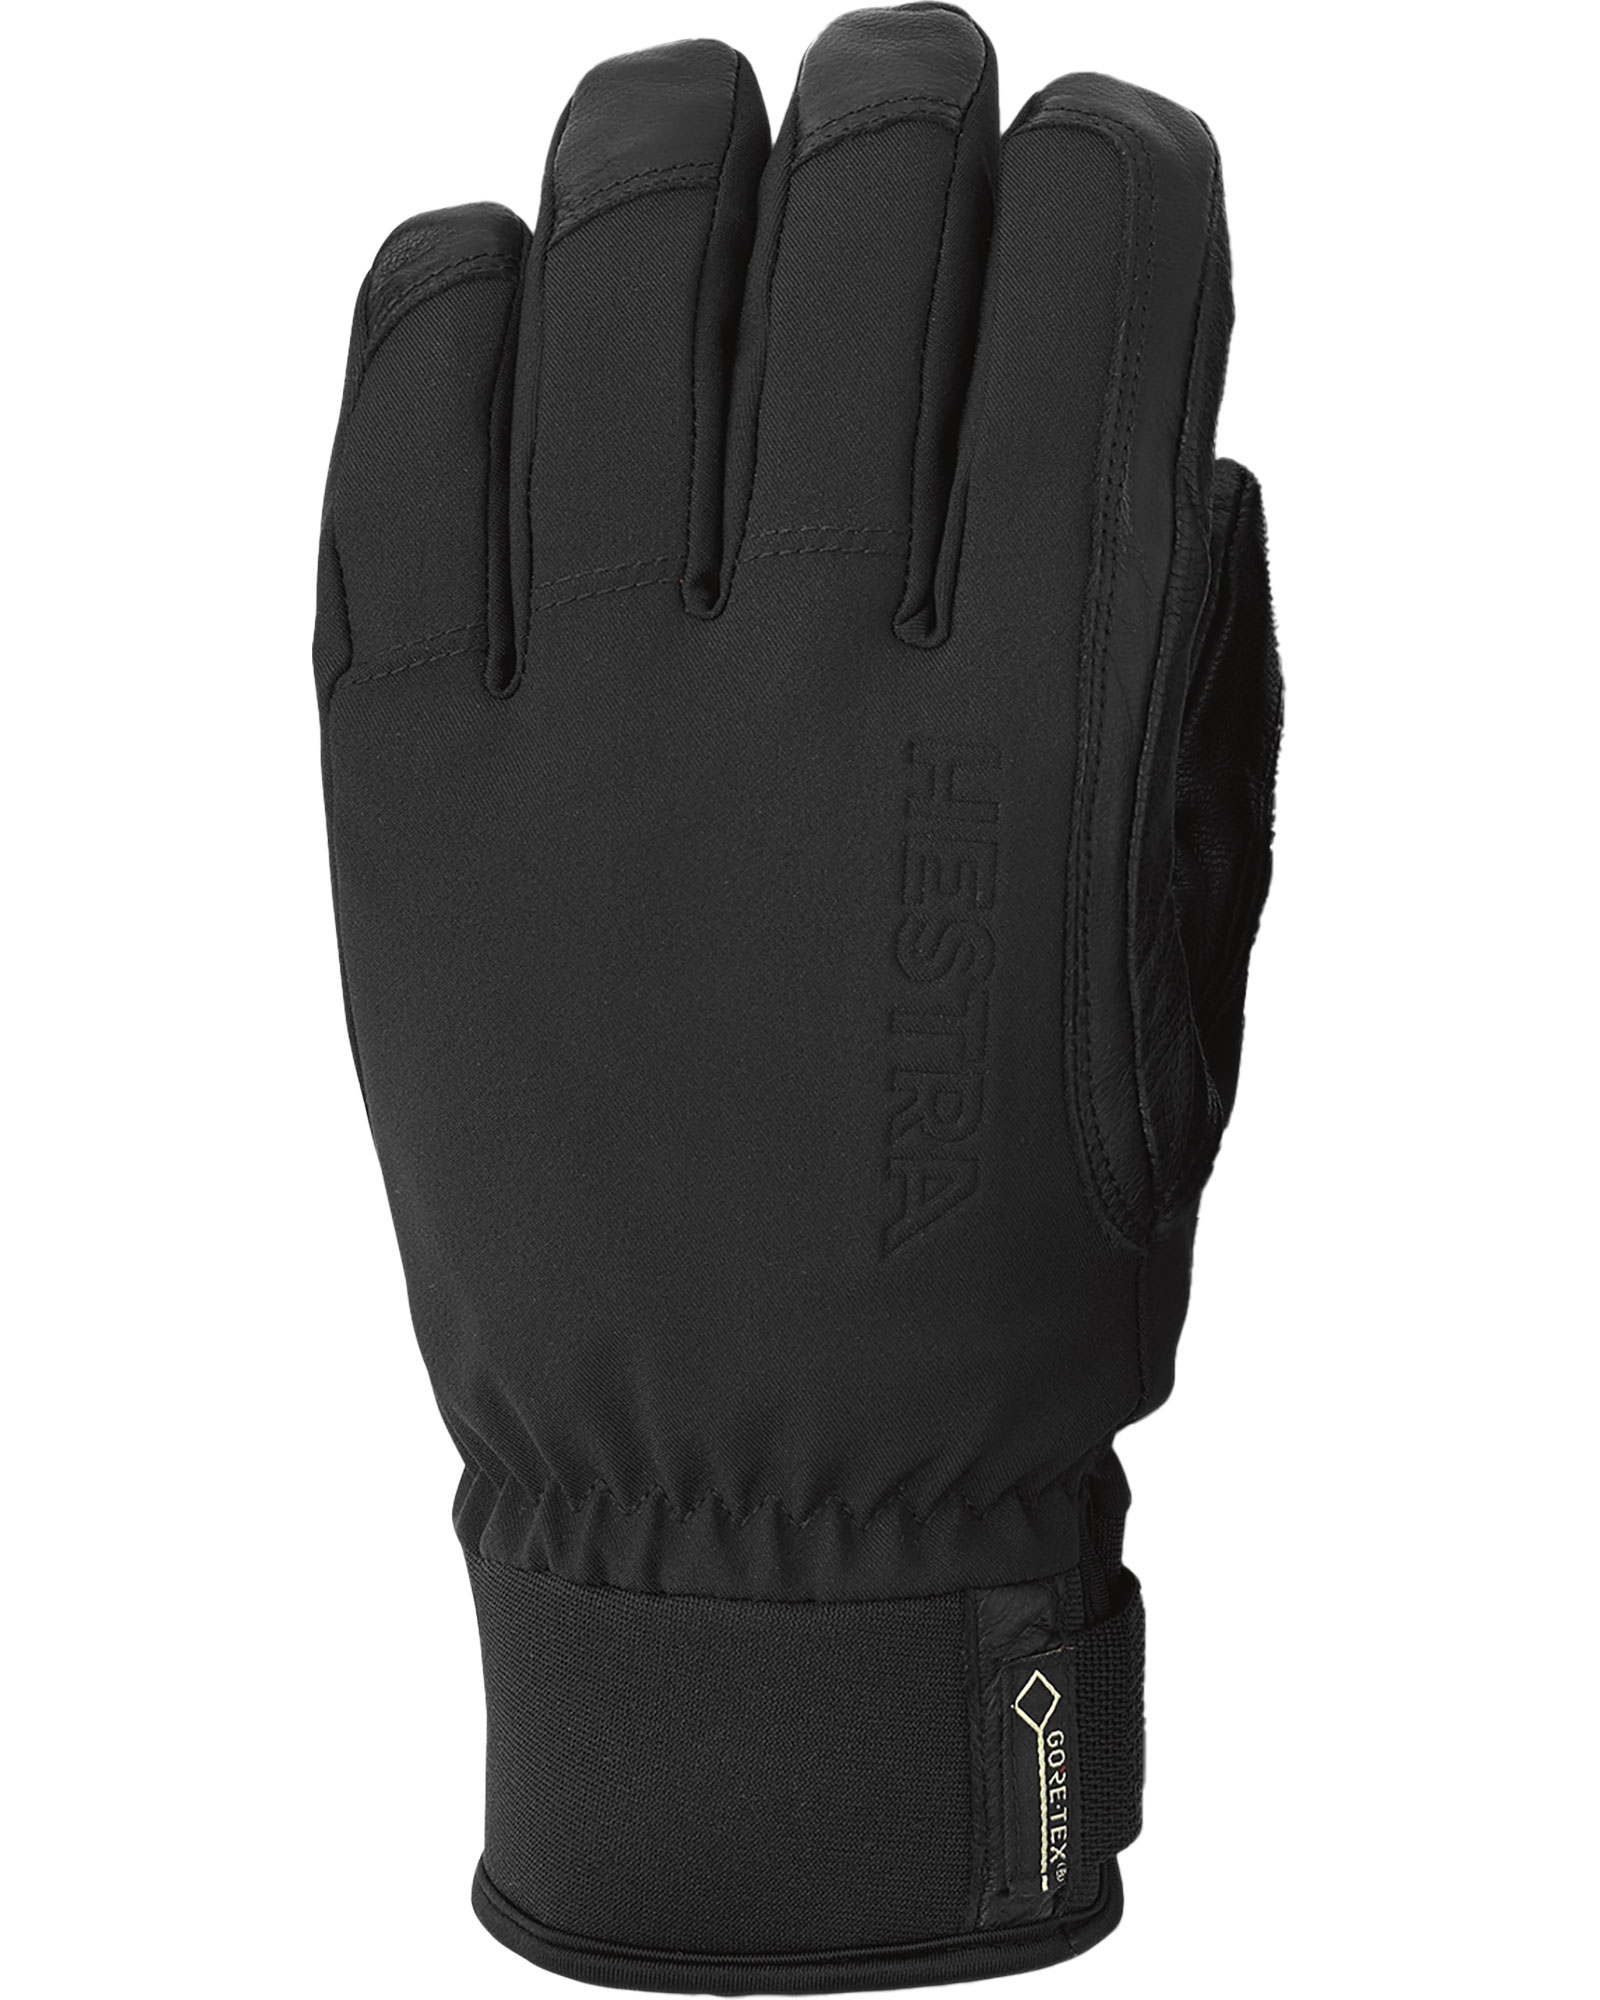 Hestra Alpine Short GORETEX Gloves  - black Size 8